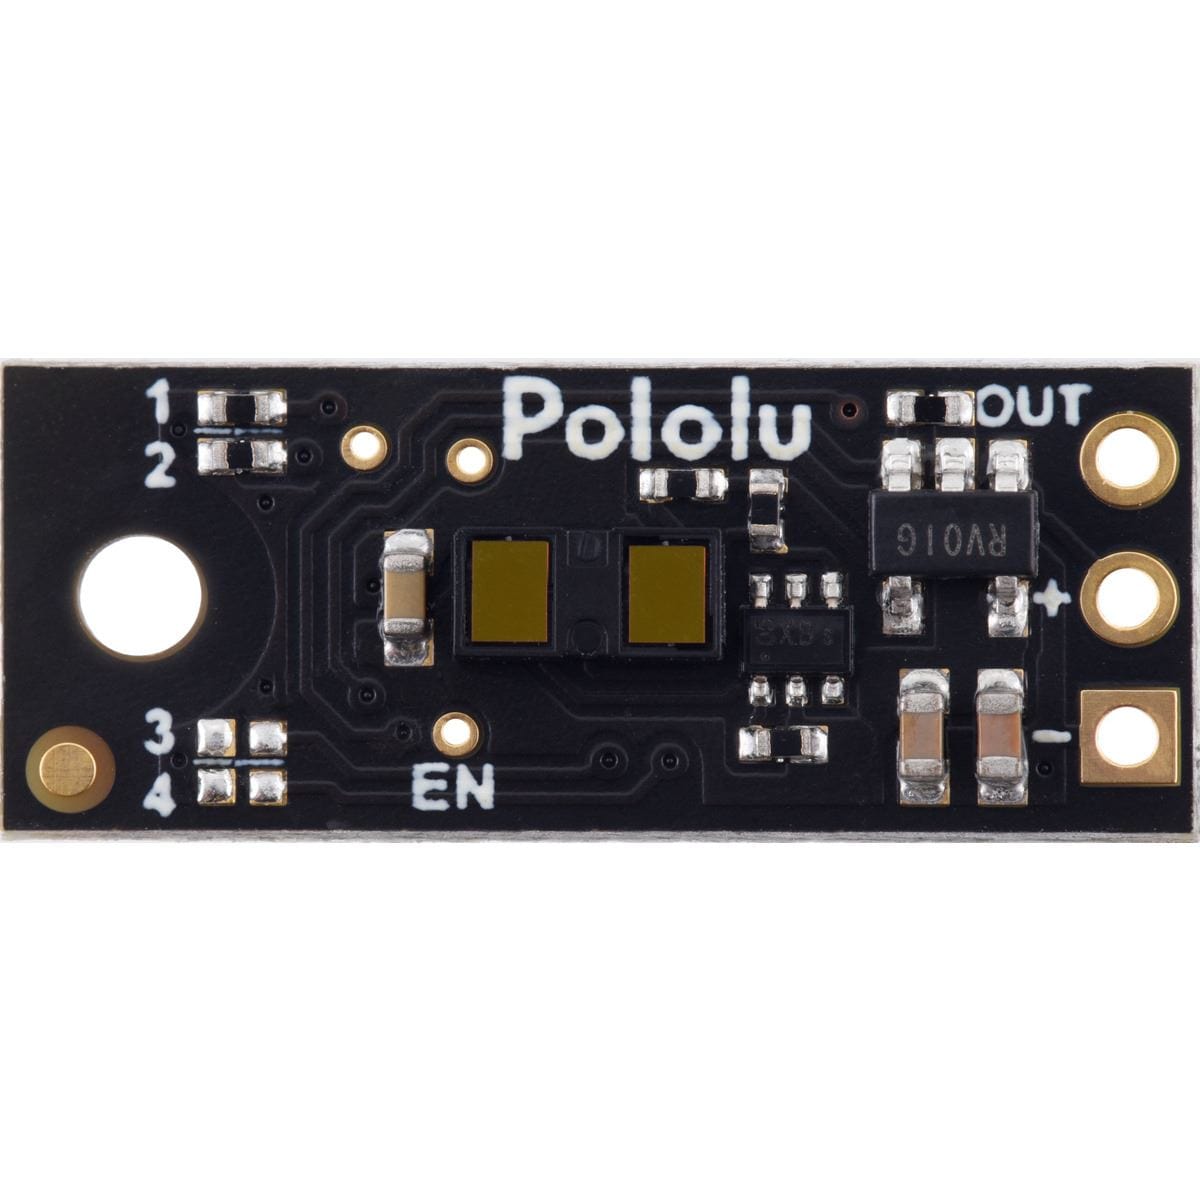 Pololu Digital Distance Sensor 100cm - The Pi Hut